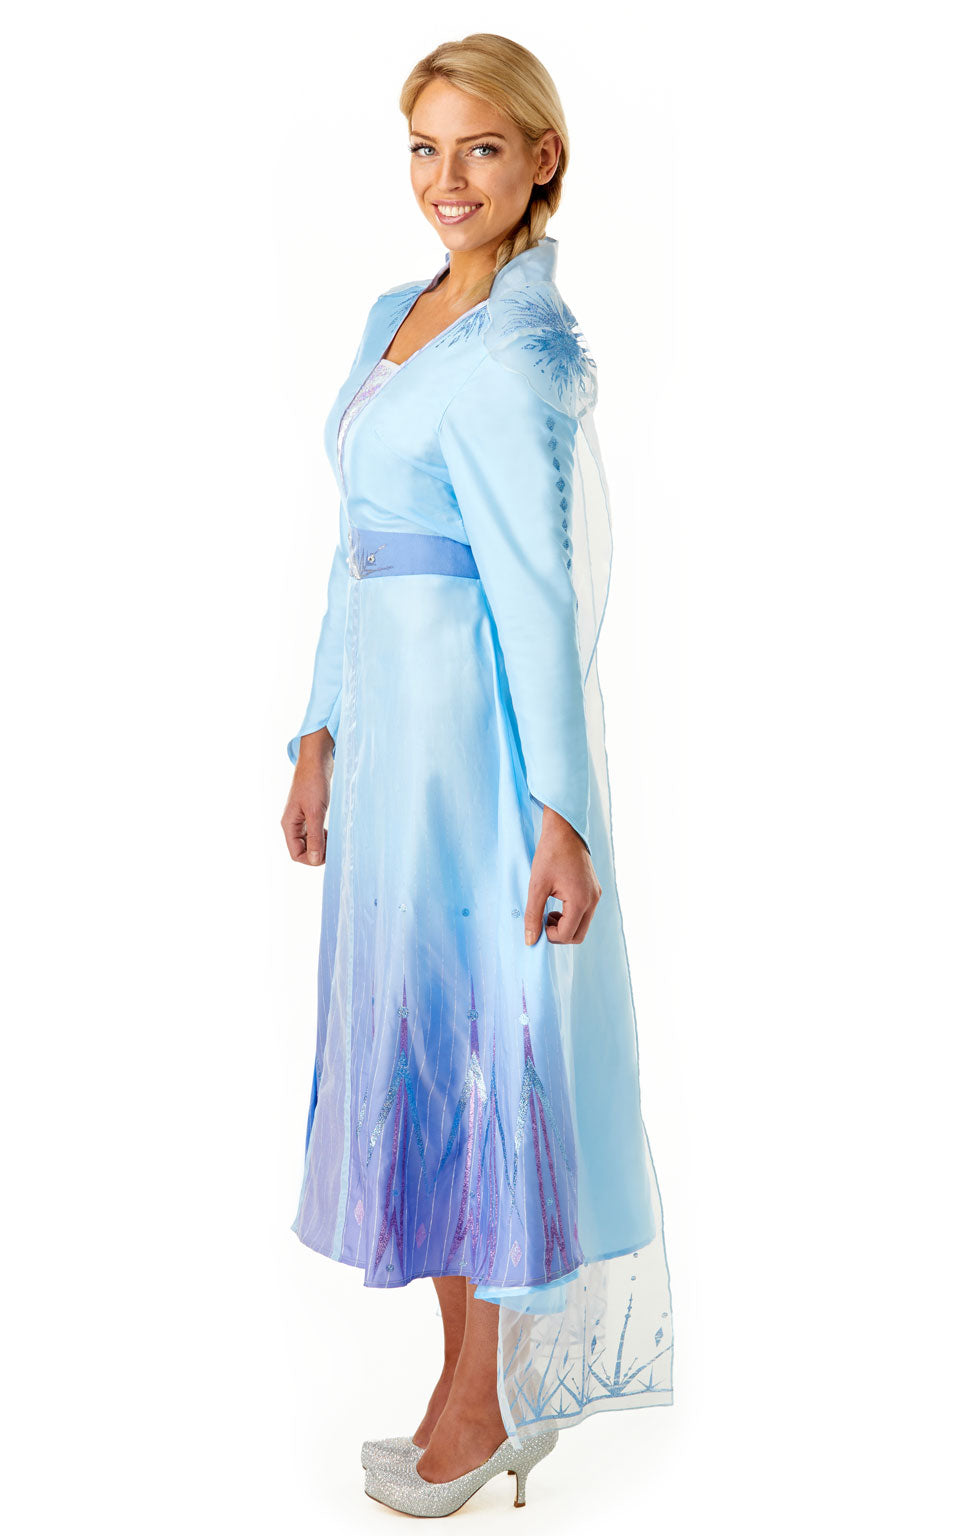 Ladies Frozen Disney Princess Elsa Fairy Tale Fancy Dress Costume